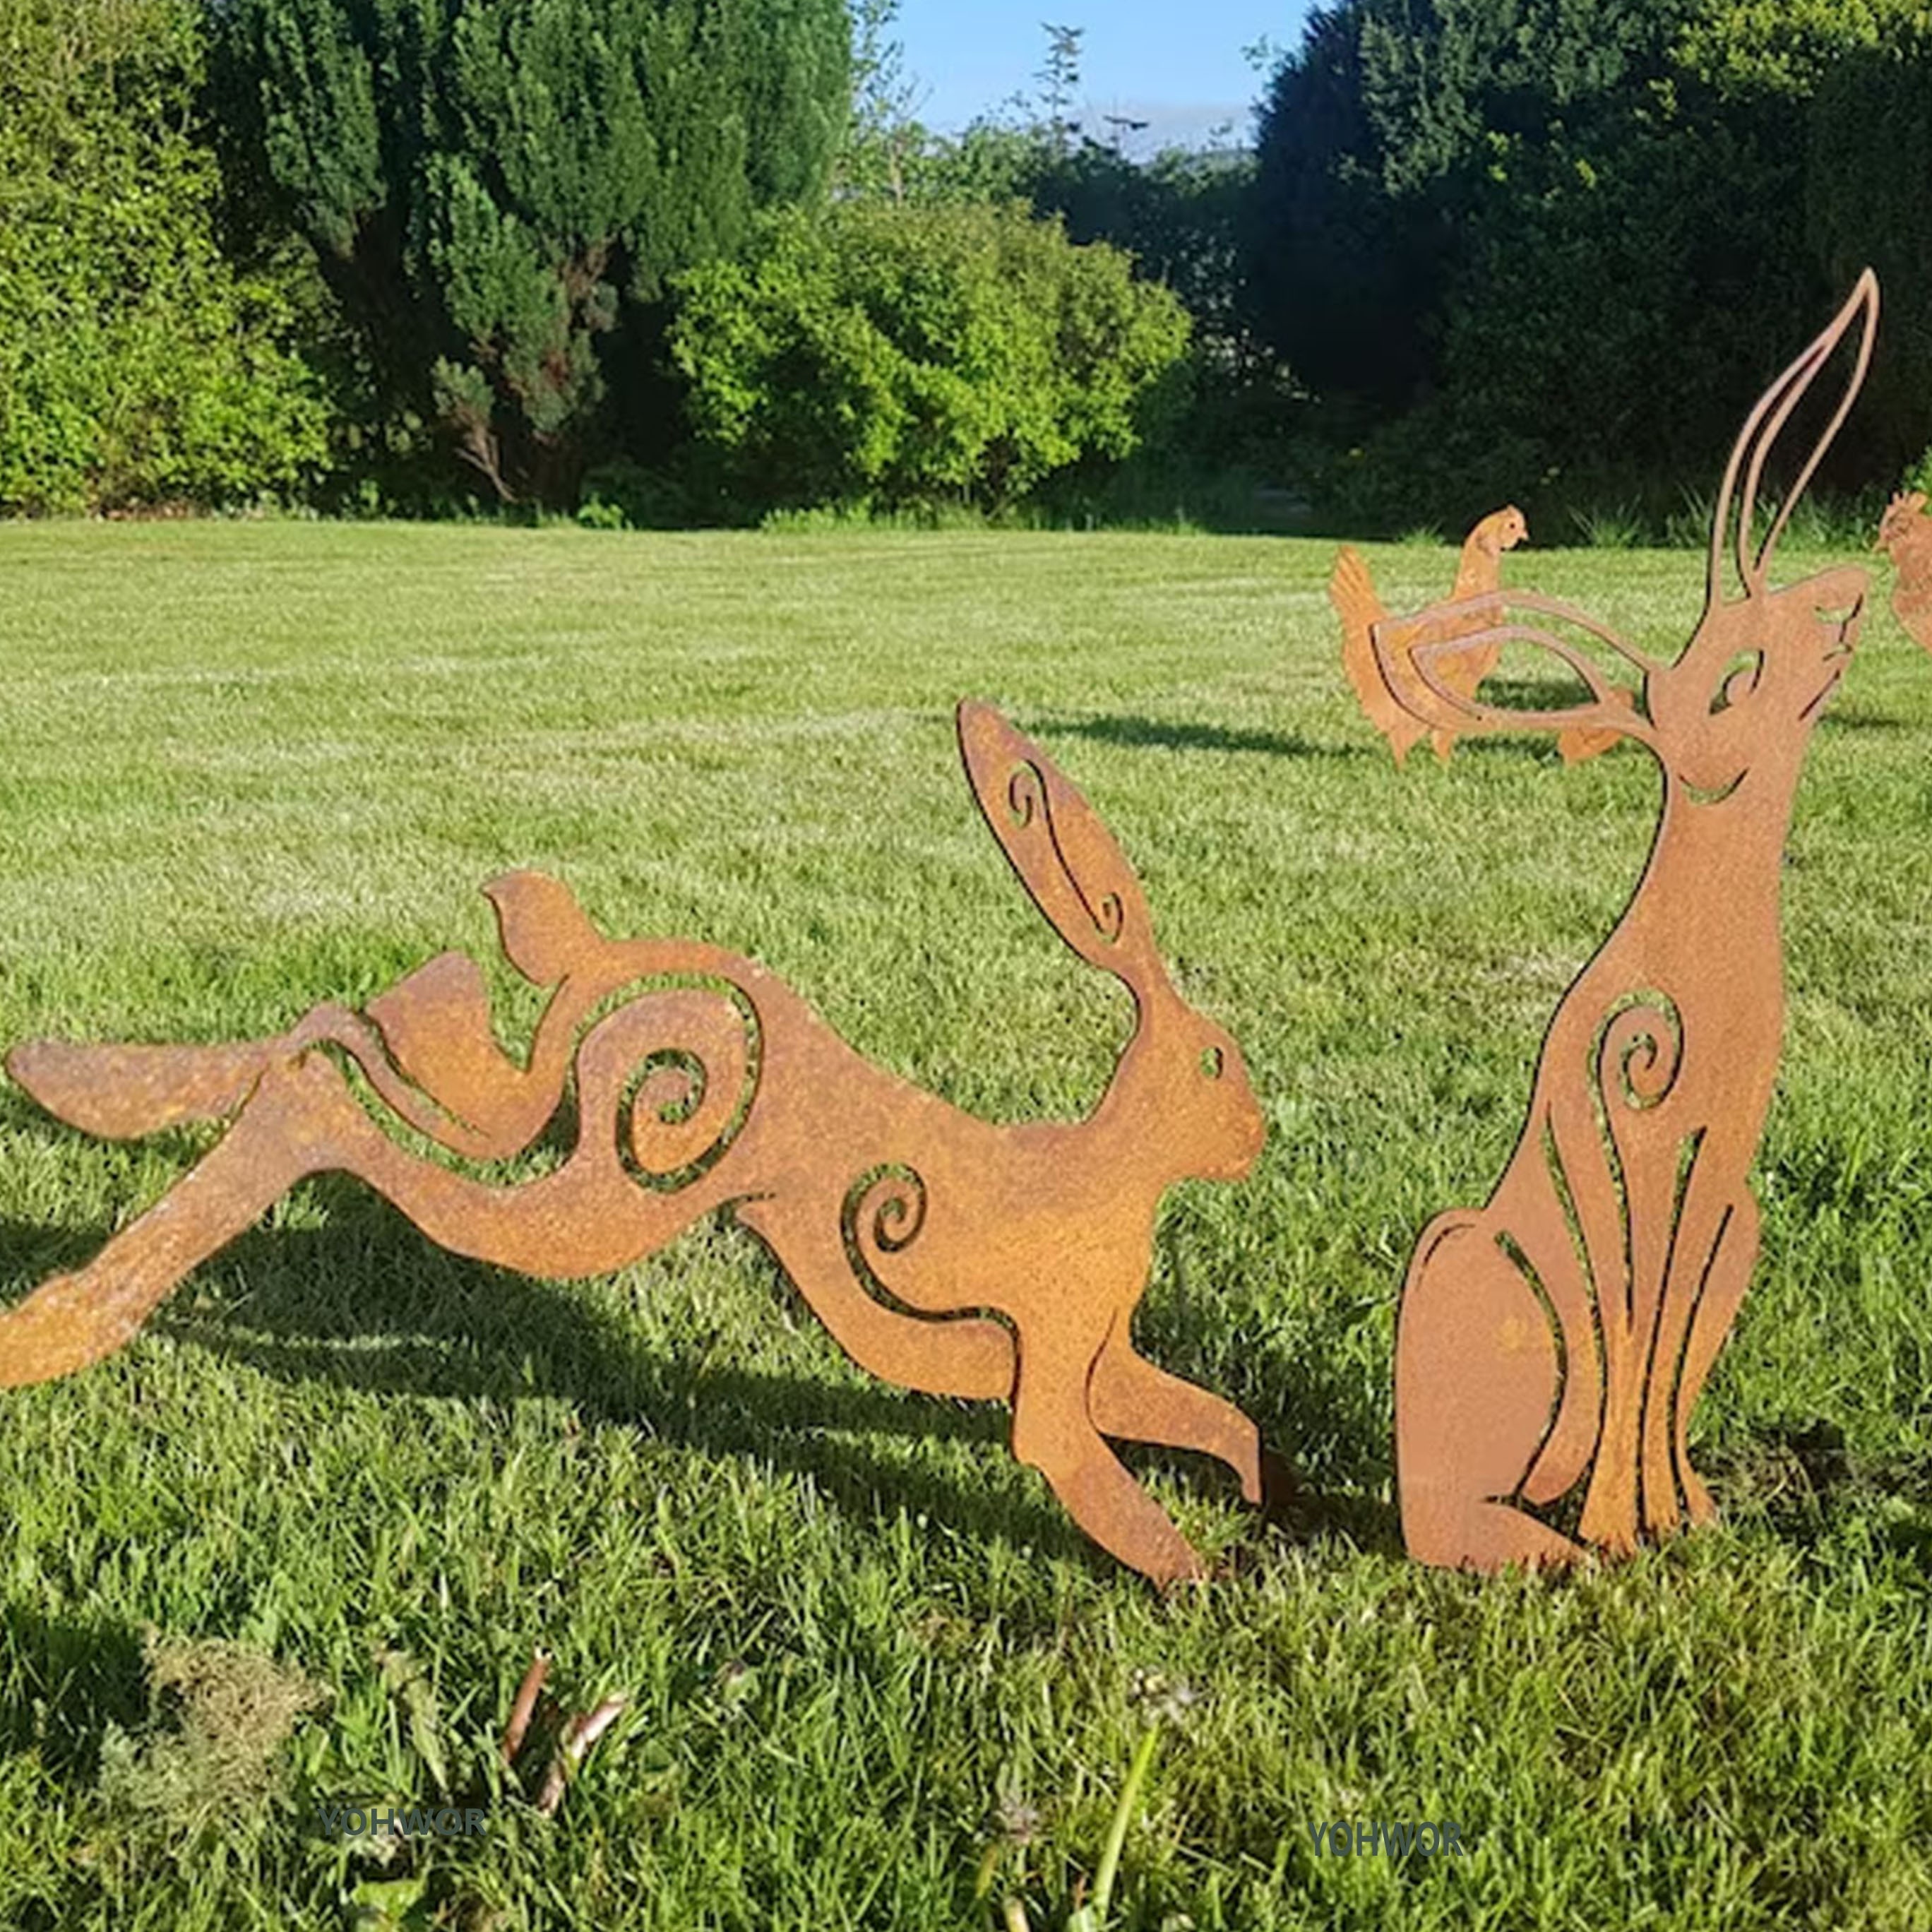 

1pc, Rusty Metal Hare, Leaping Rusty Metal Hare, Rusty Metal Moon Gazing Hare, Garden Ornaments - Rabbit - Star Gazing, Rusty Metal Garden Decor/outdoor Garden Decoration/farmhouse Decor